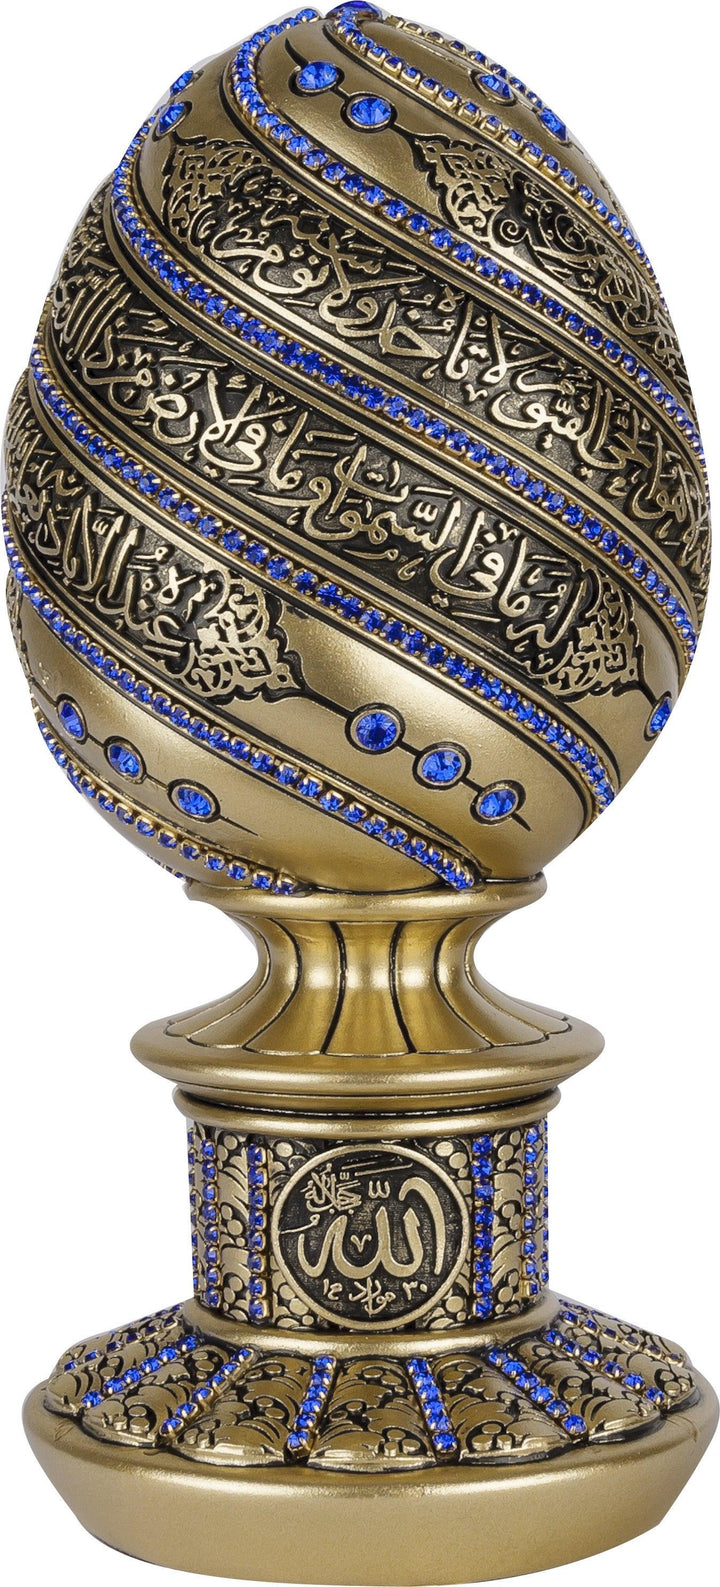 A beautiful golden and black egg sculpture engraved with Ayatul Kurs-BB-0931-1646-theislamcshop.com